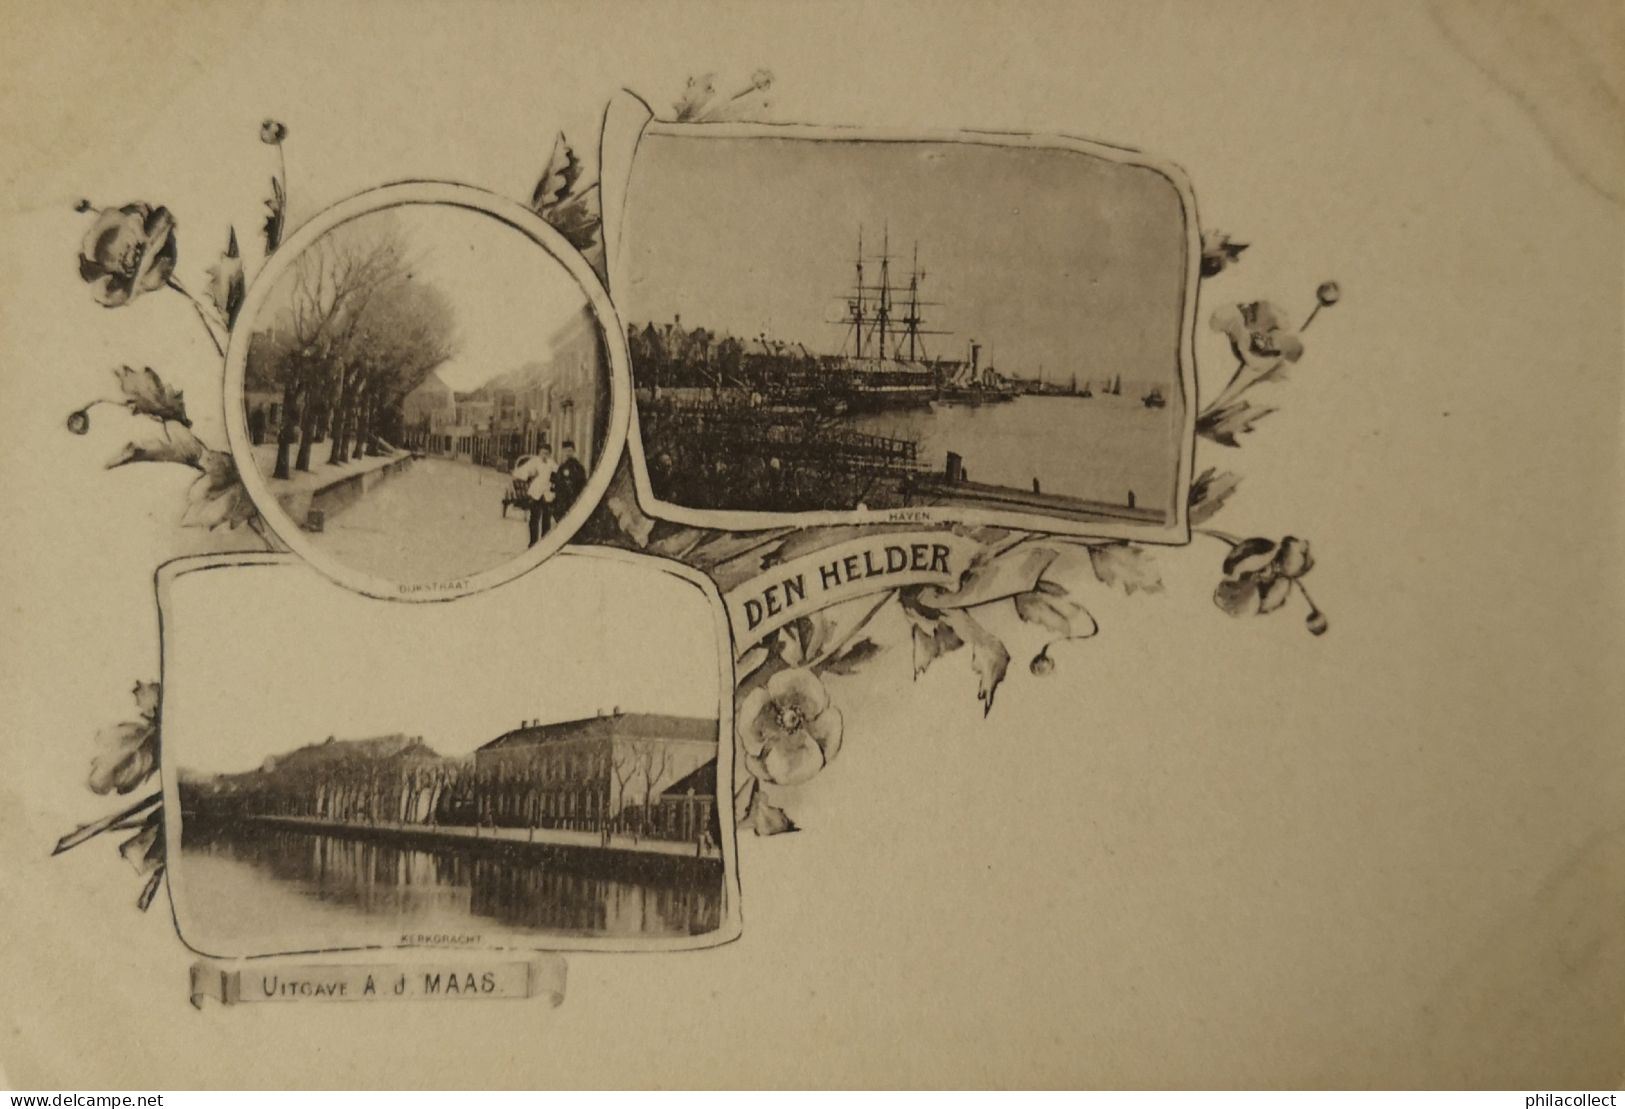 Den Helder (NH) Vroege Litho Kaart Ca 1899 Uitg. A. J. Maas - Topkaart - Den Helder